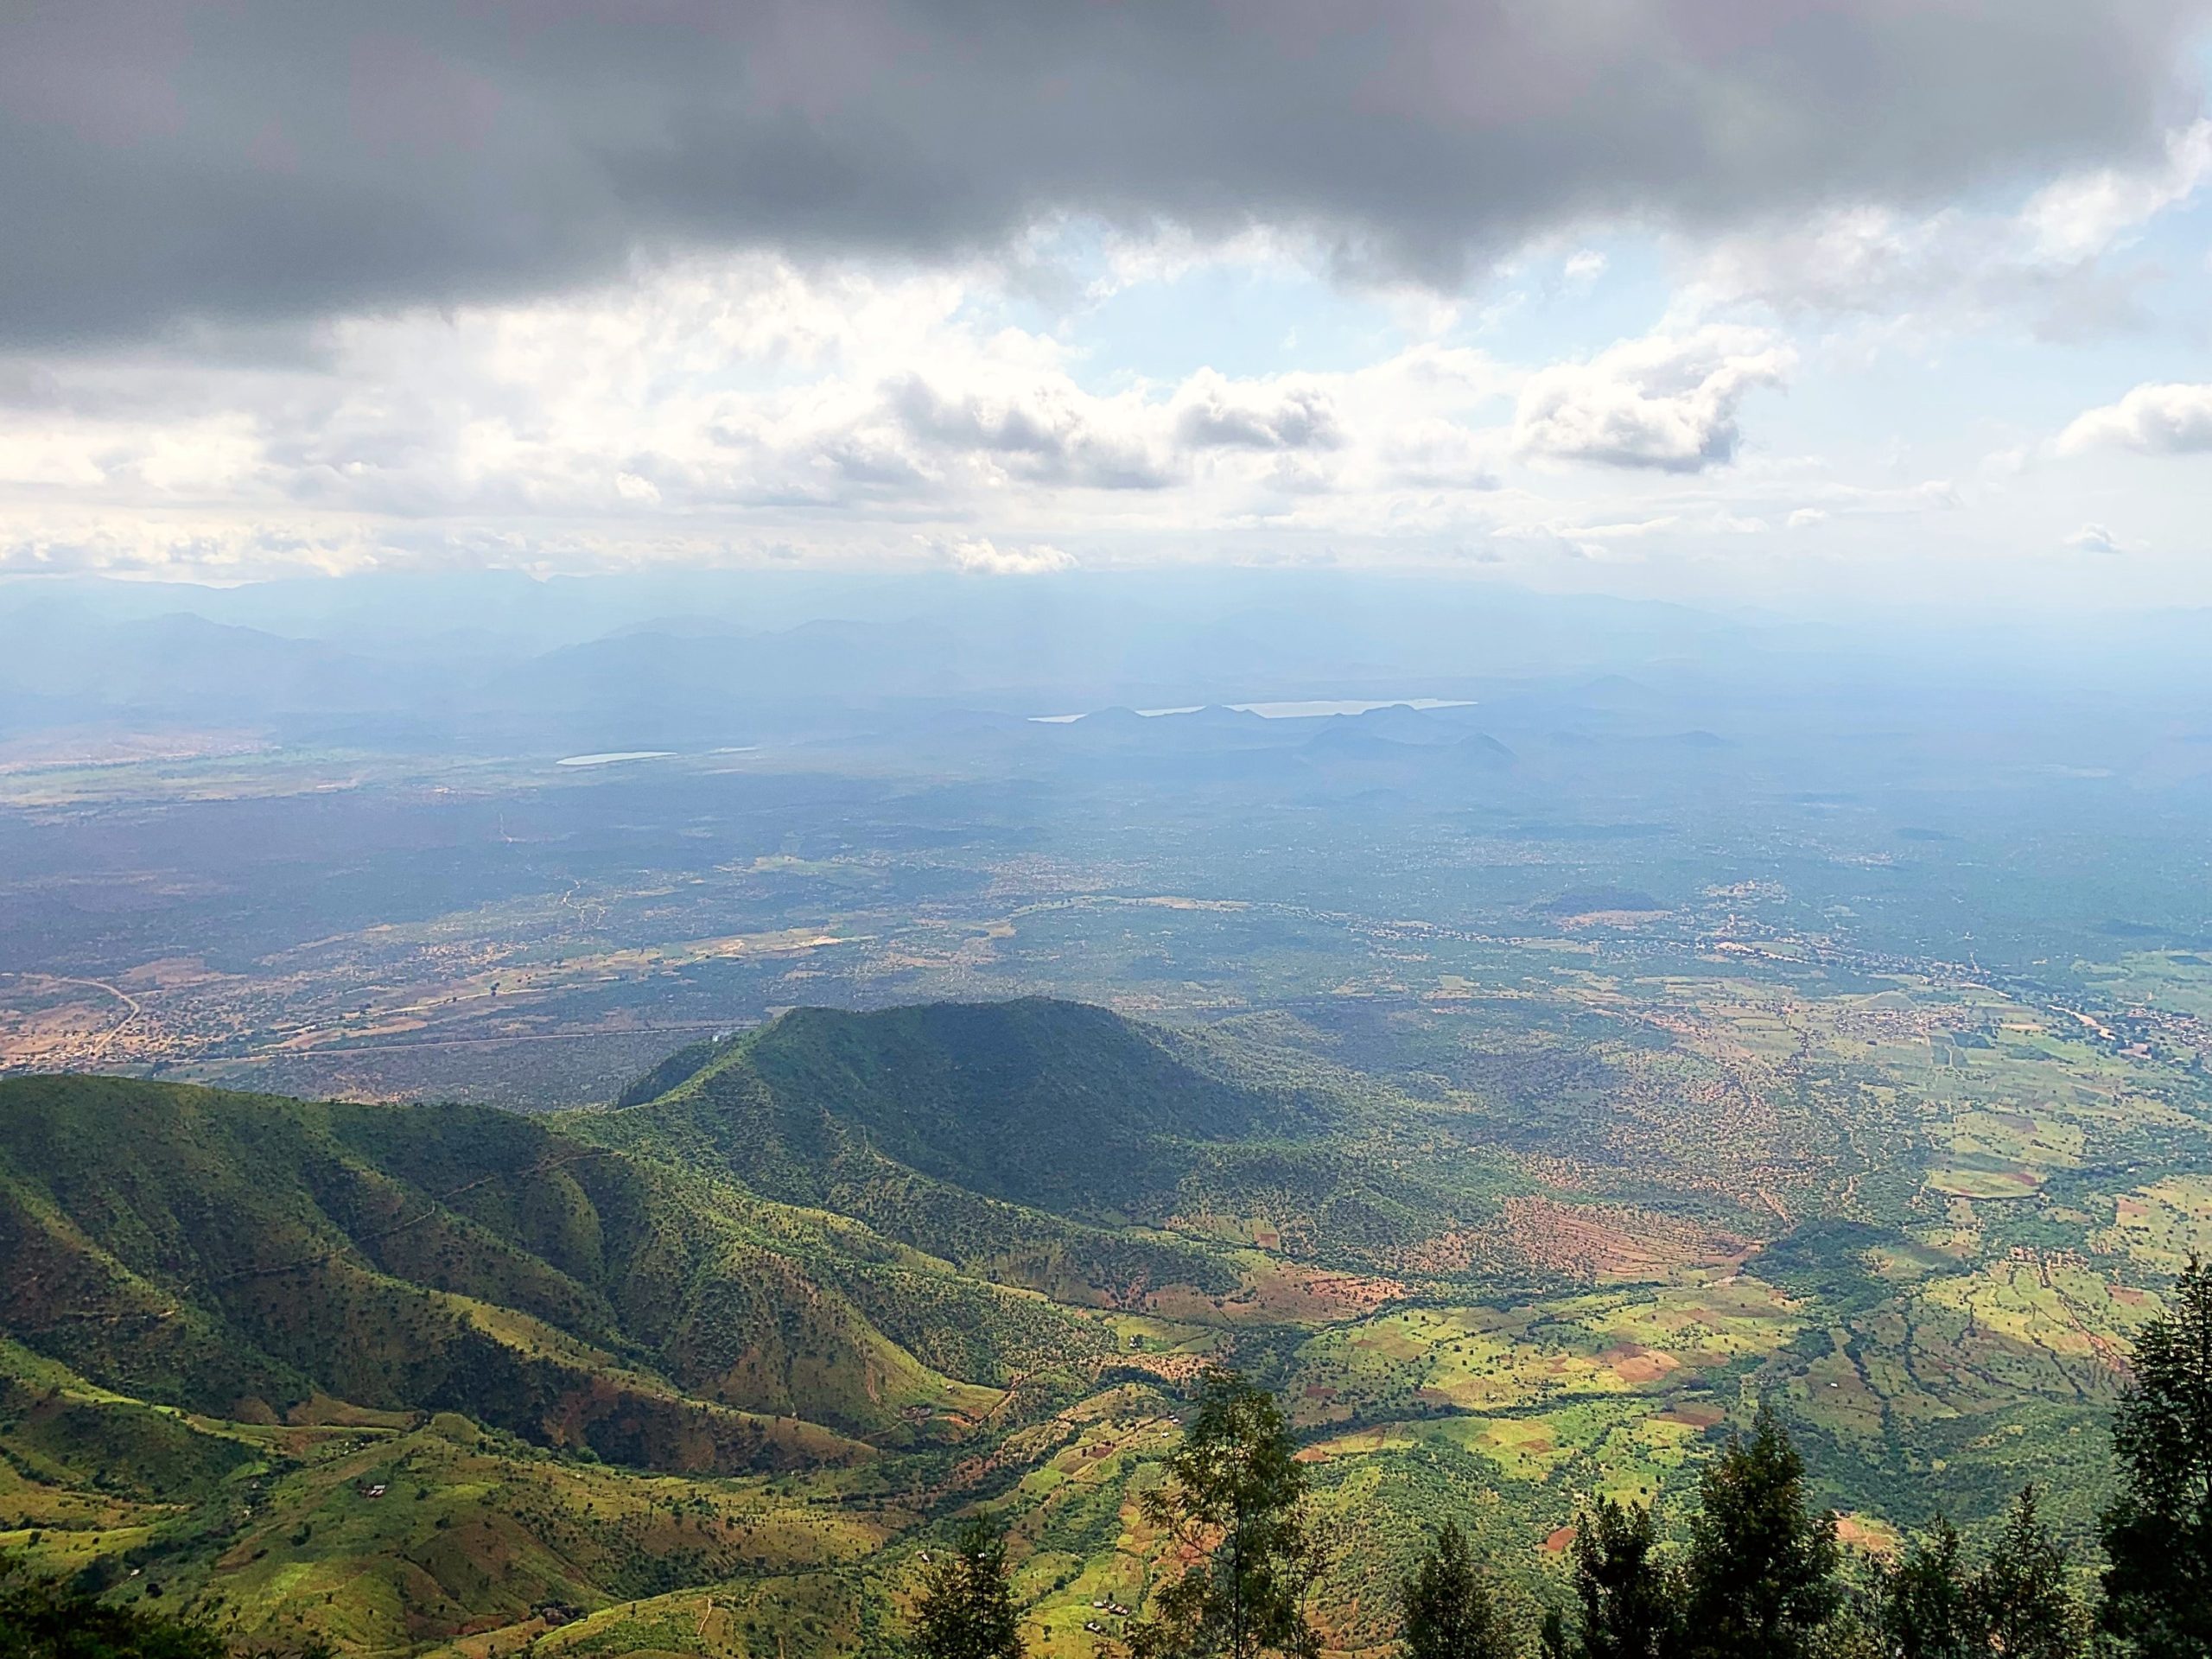 Aerial photograph of a mountain range in Tanzania